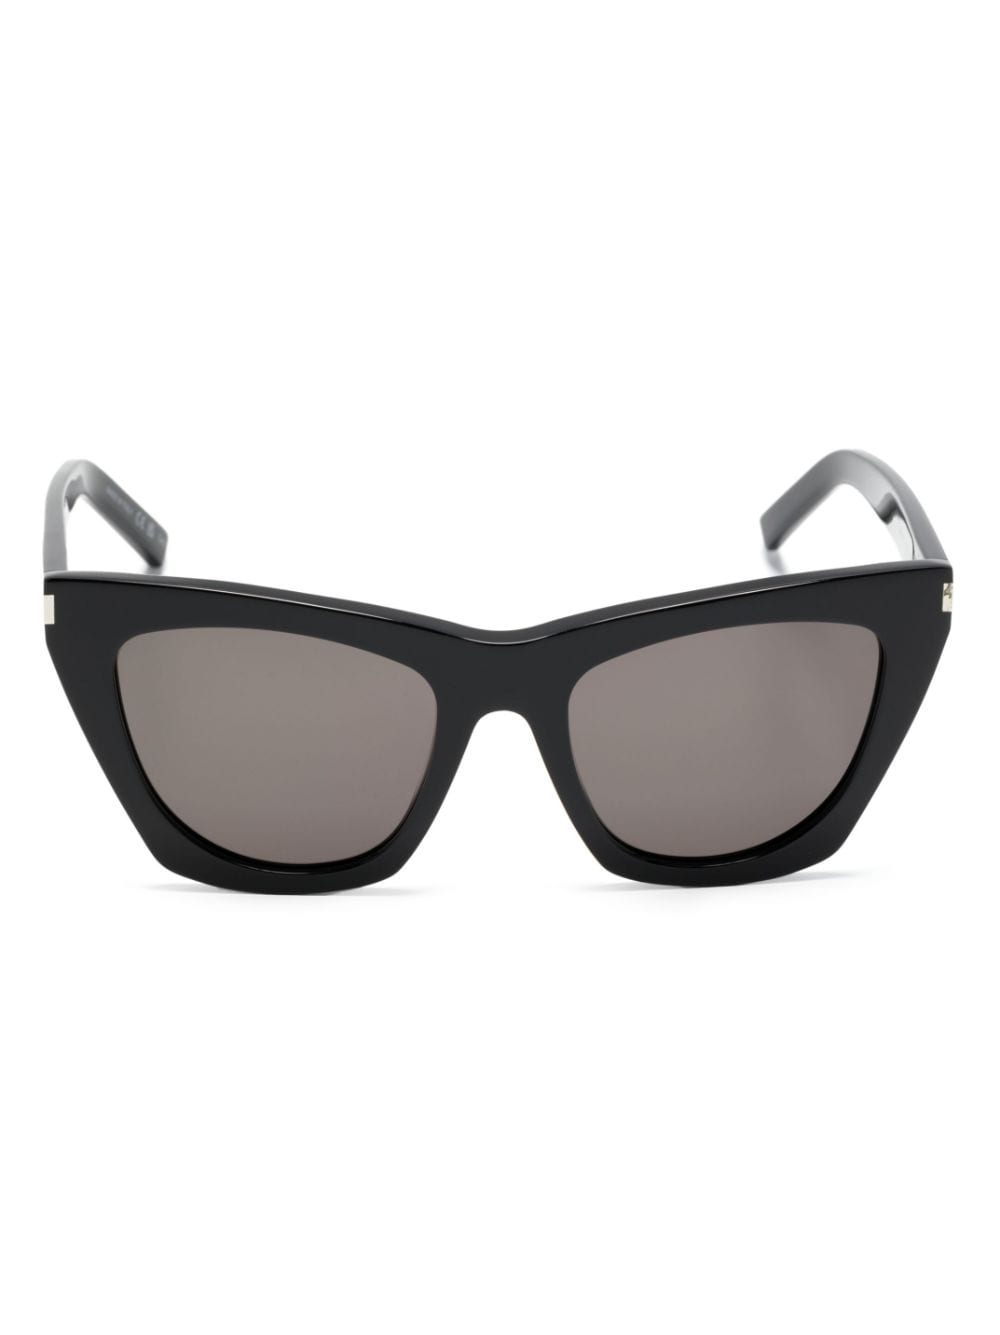 Saint Laurent New Wave 214 Kate Sunglasses In Black